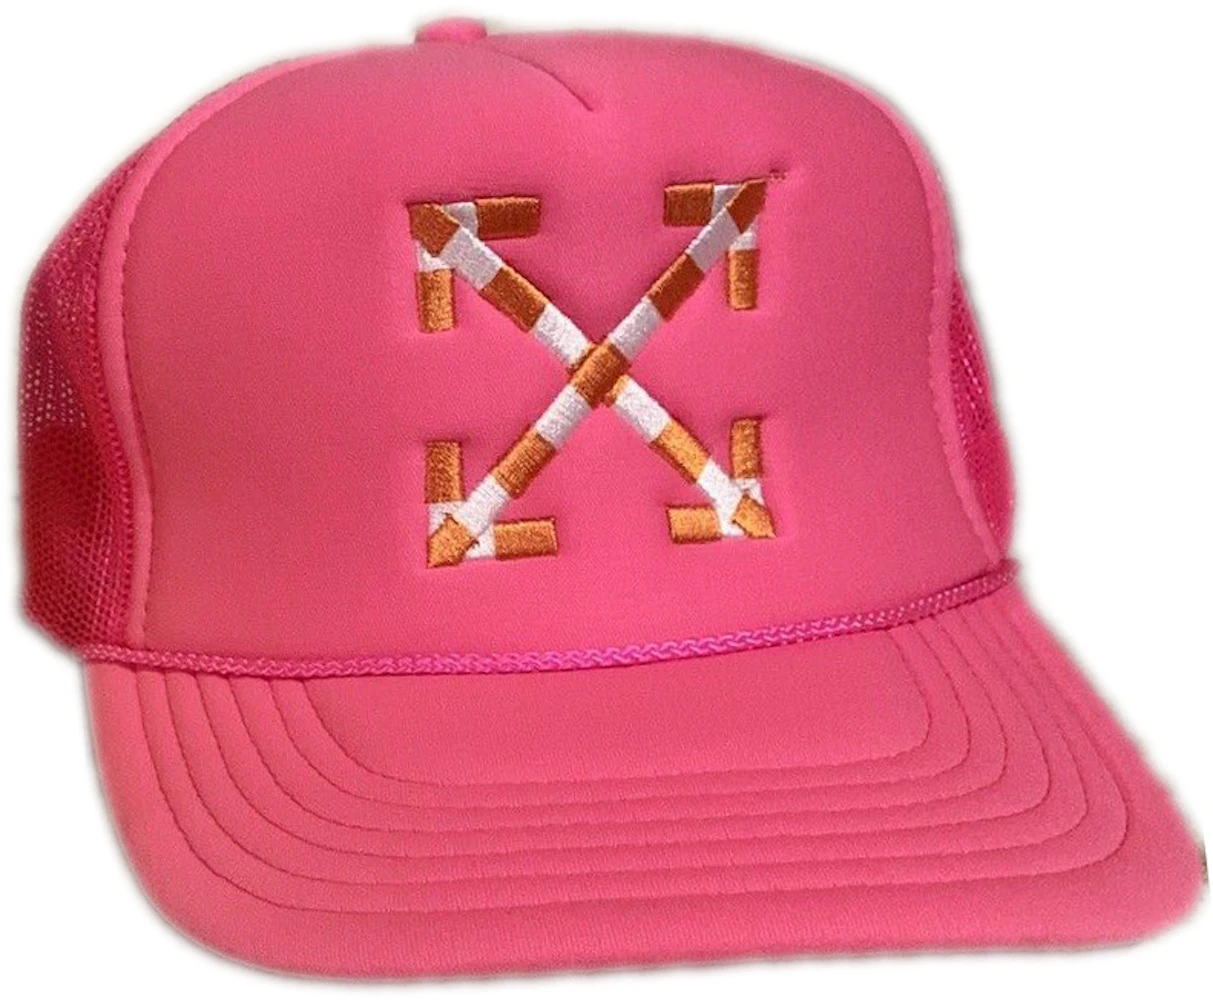 Virgil Abloh x MCA Figures of Speech Arrows Trucker Hat Pink - SS19